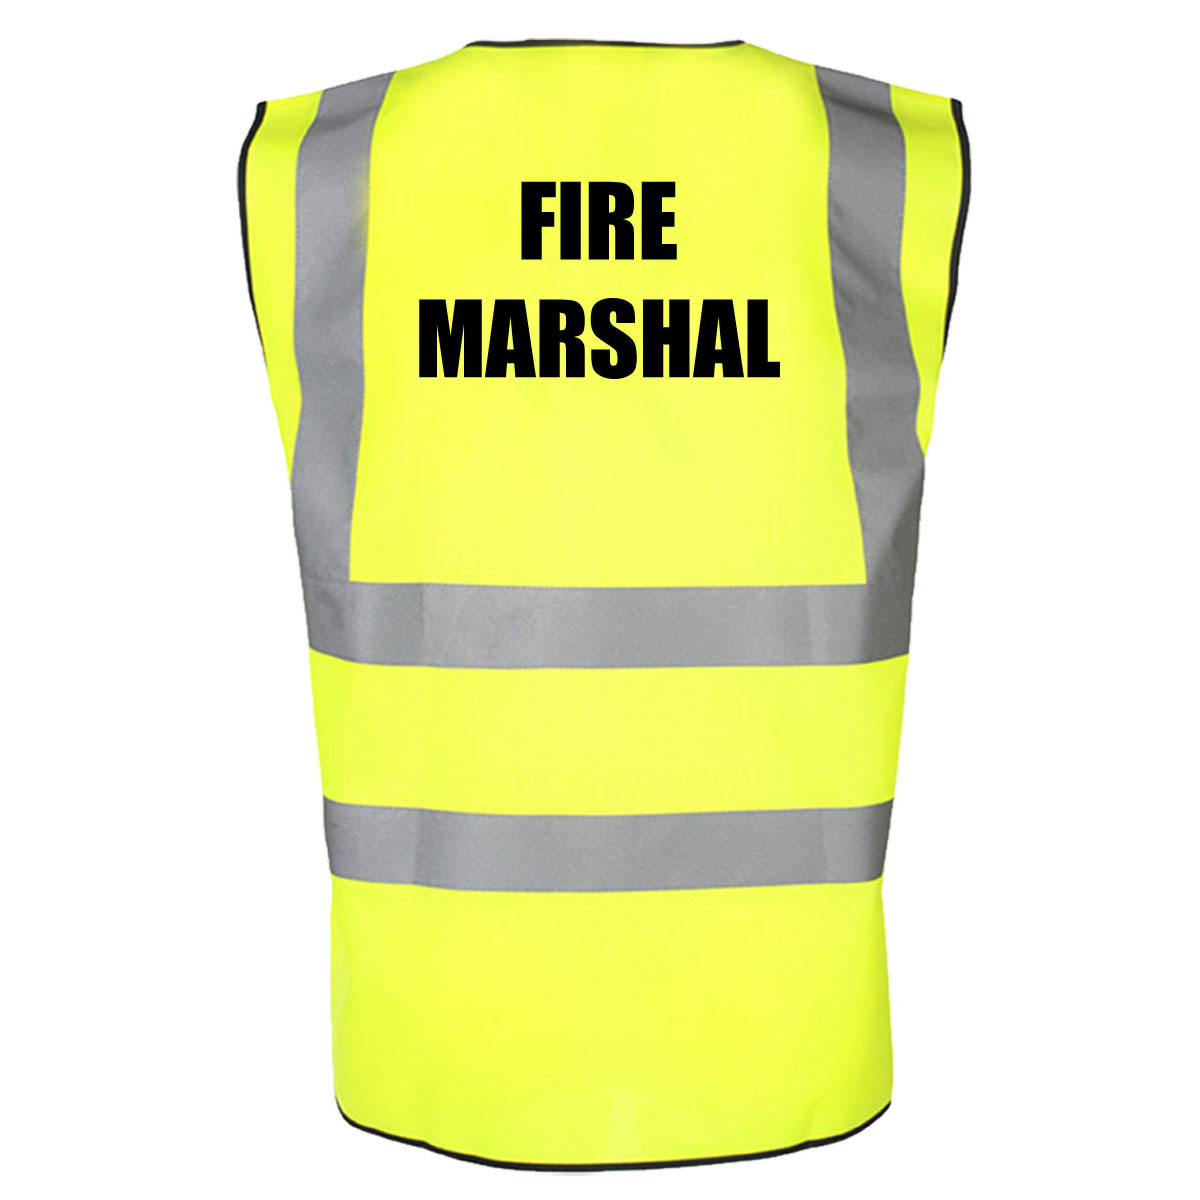 Fire Marshal.